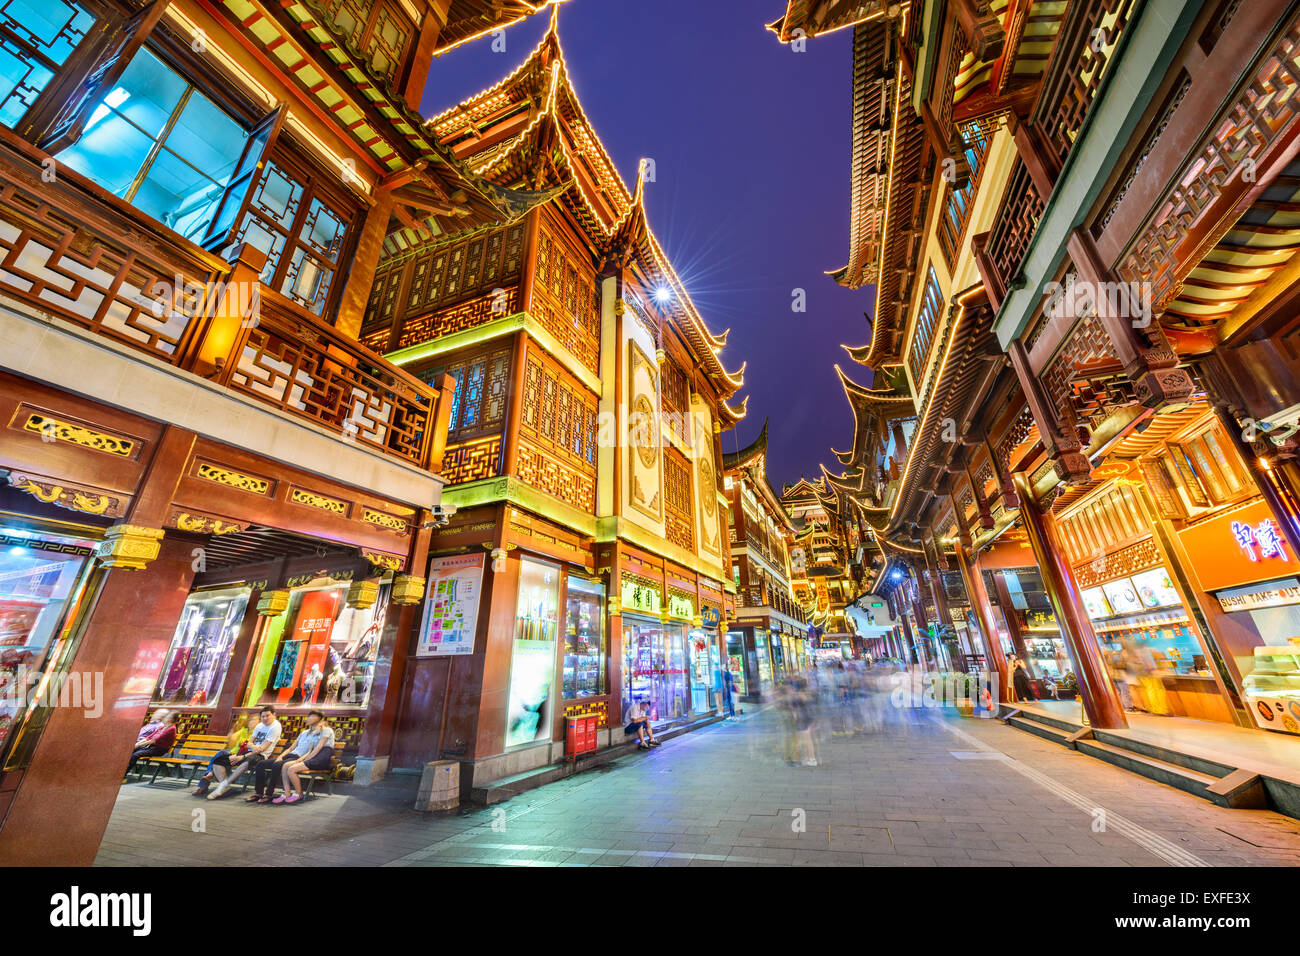 Shoppers in the Yuyuan Bazaar of Shanghai, China. Stock Photo